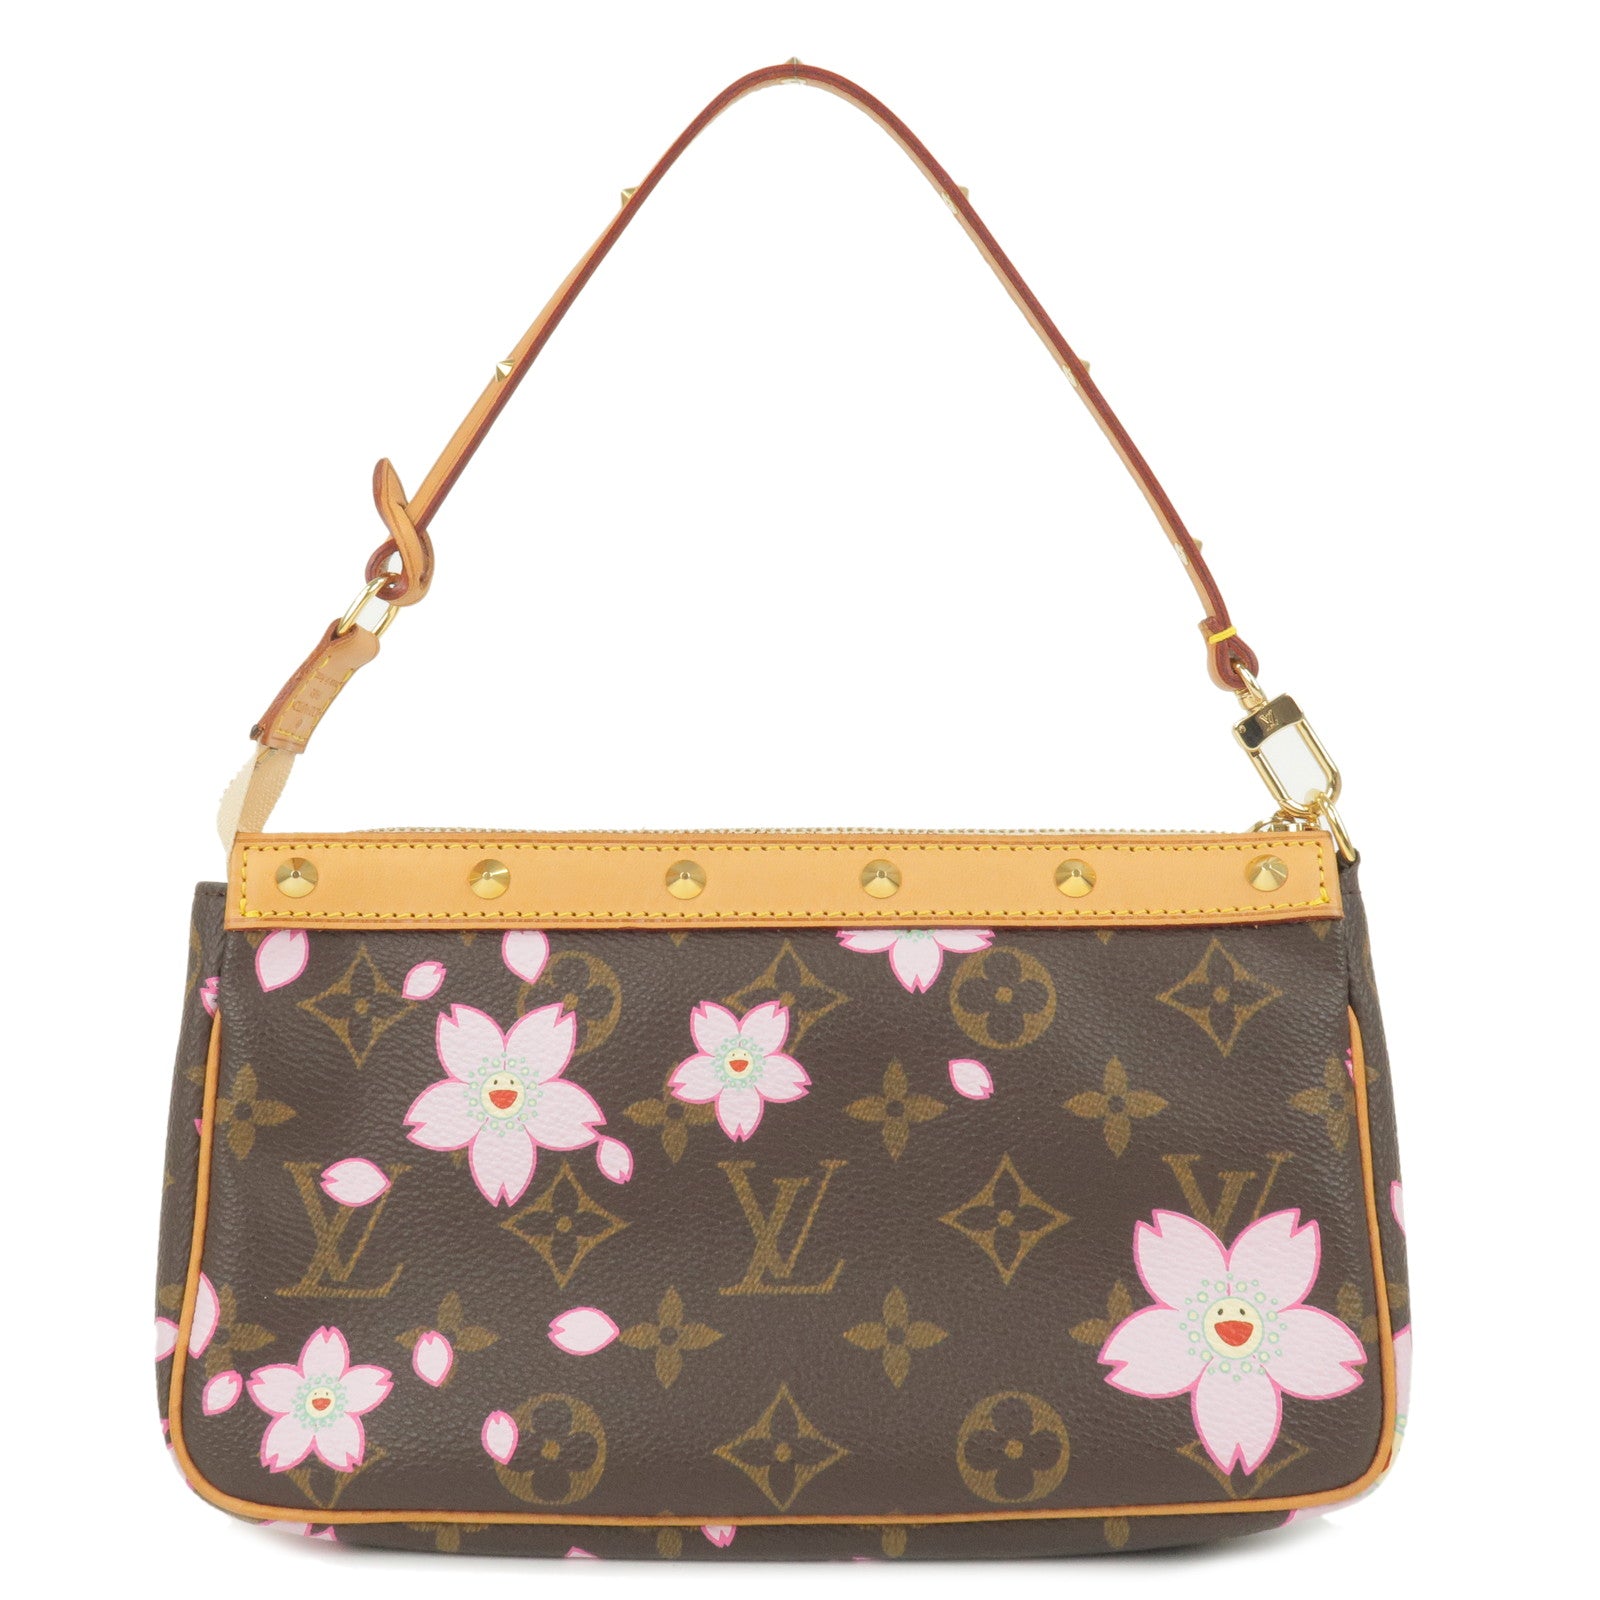 LOUIS VUITTON Cherry Blossom Monogram Papillon Handbag | eBay